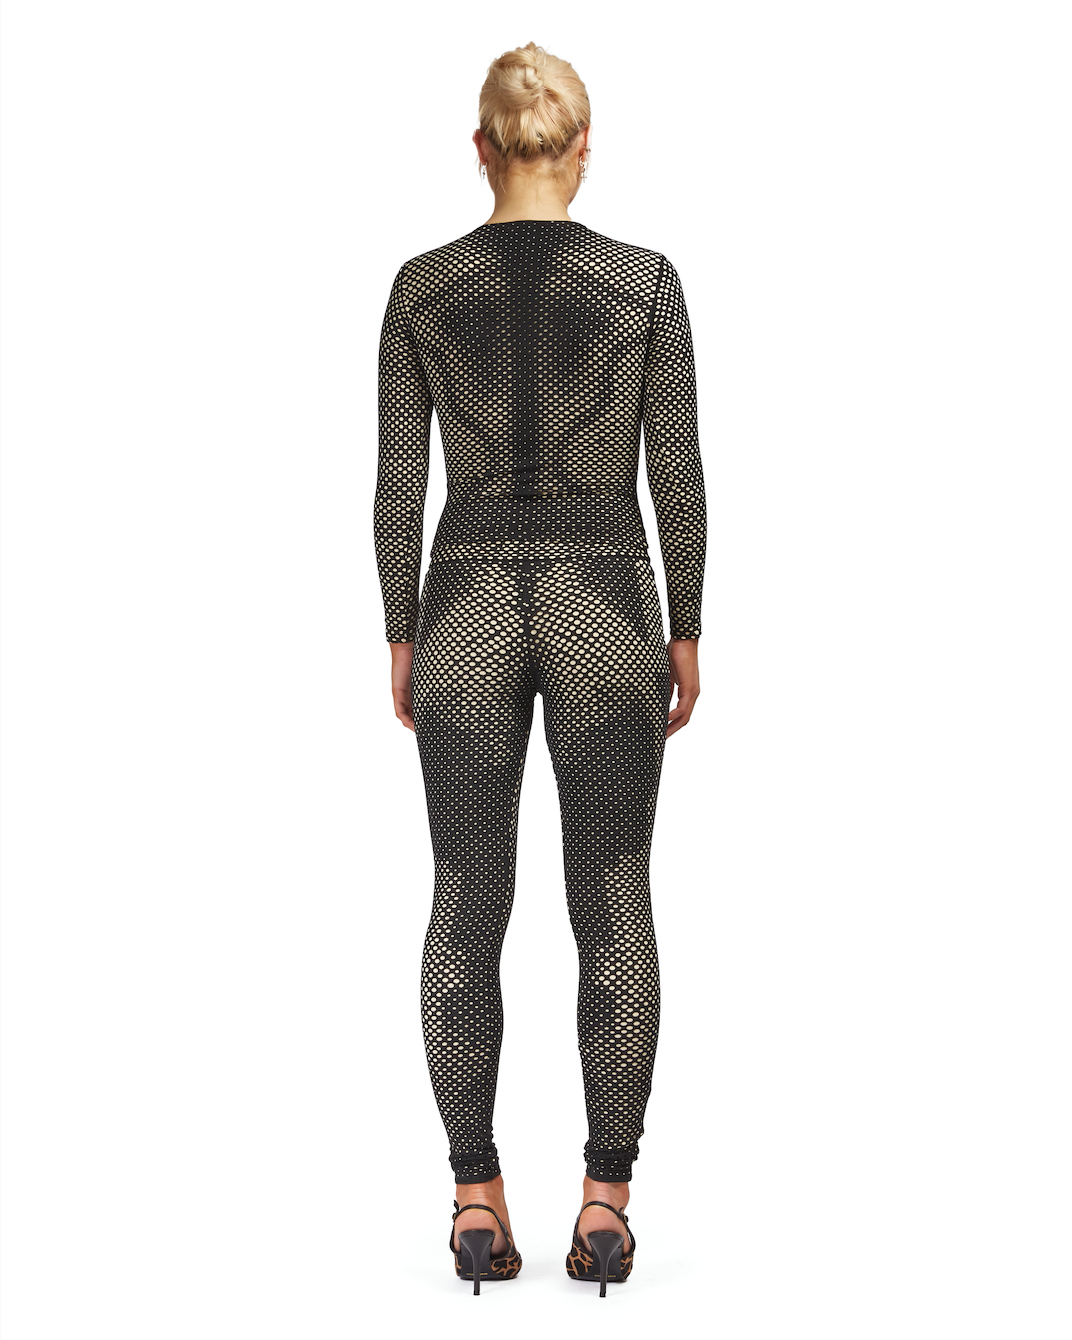 Laser-Cut body enhancing double layer leggings